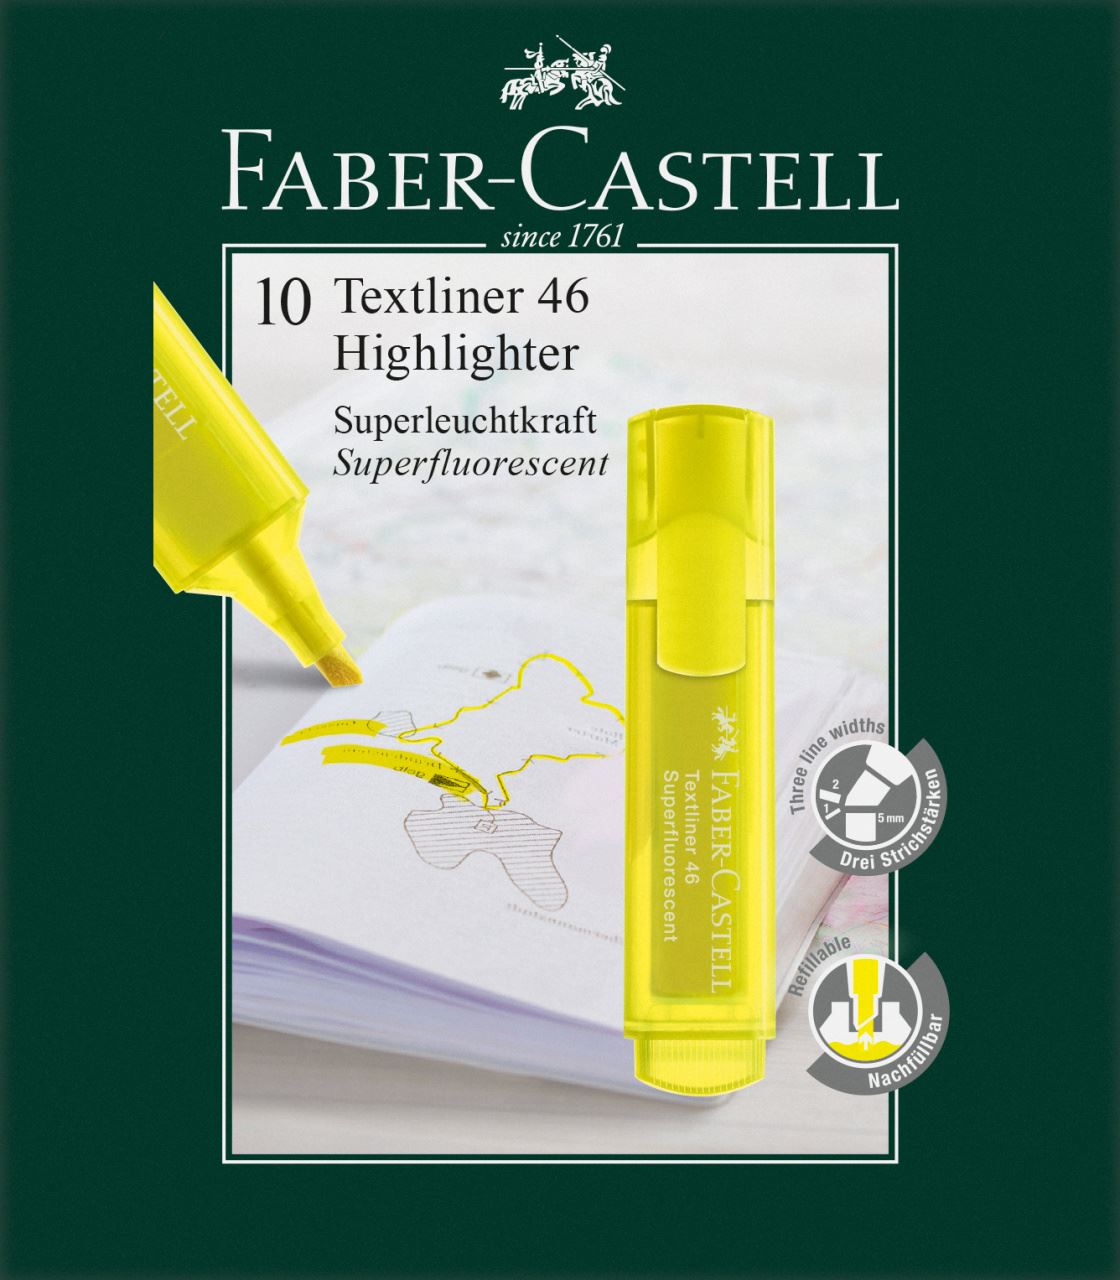 Faber-Castell - Evidenziatore Textliner 1546 Fluo giallo